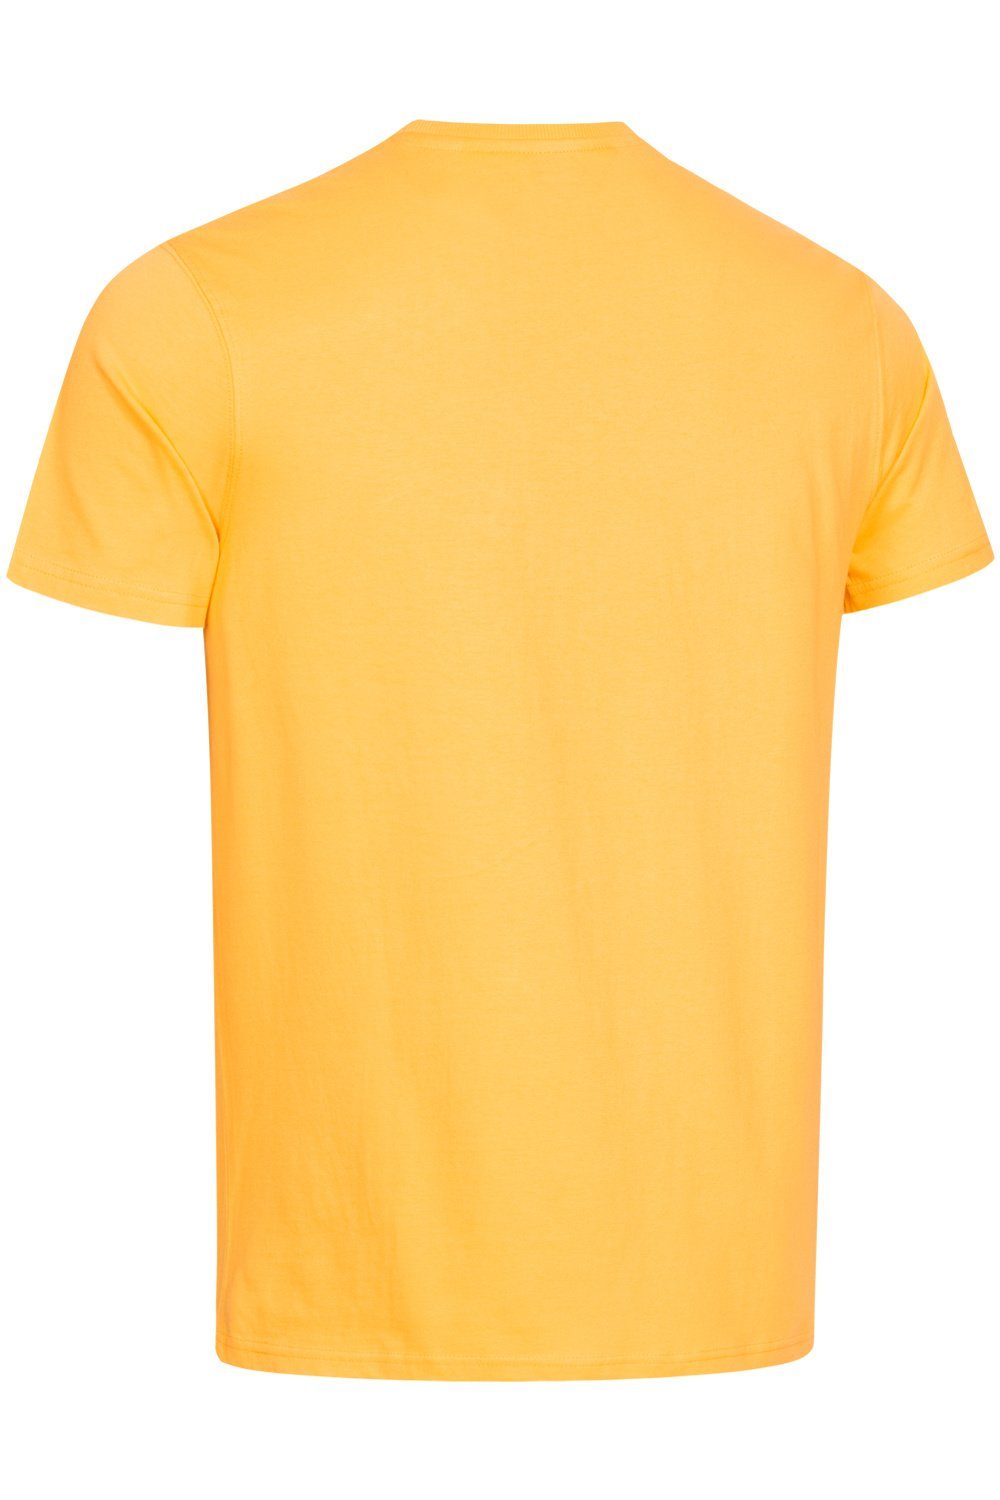 T-Shirt Lonsdale Pitsligo Herren T-Shirt yellow/black Adult Lonsdale